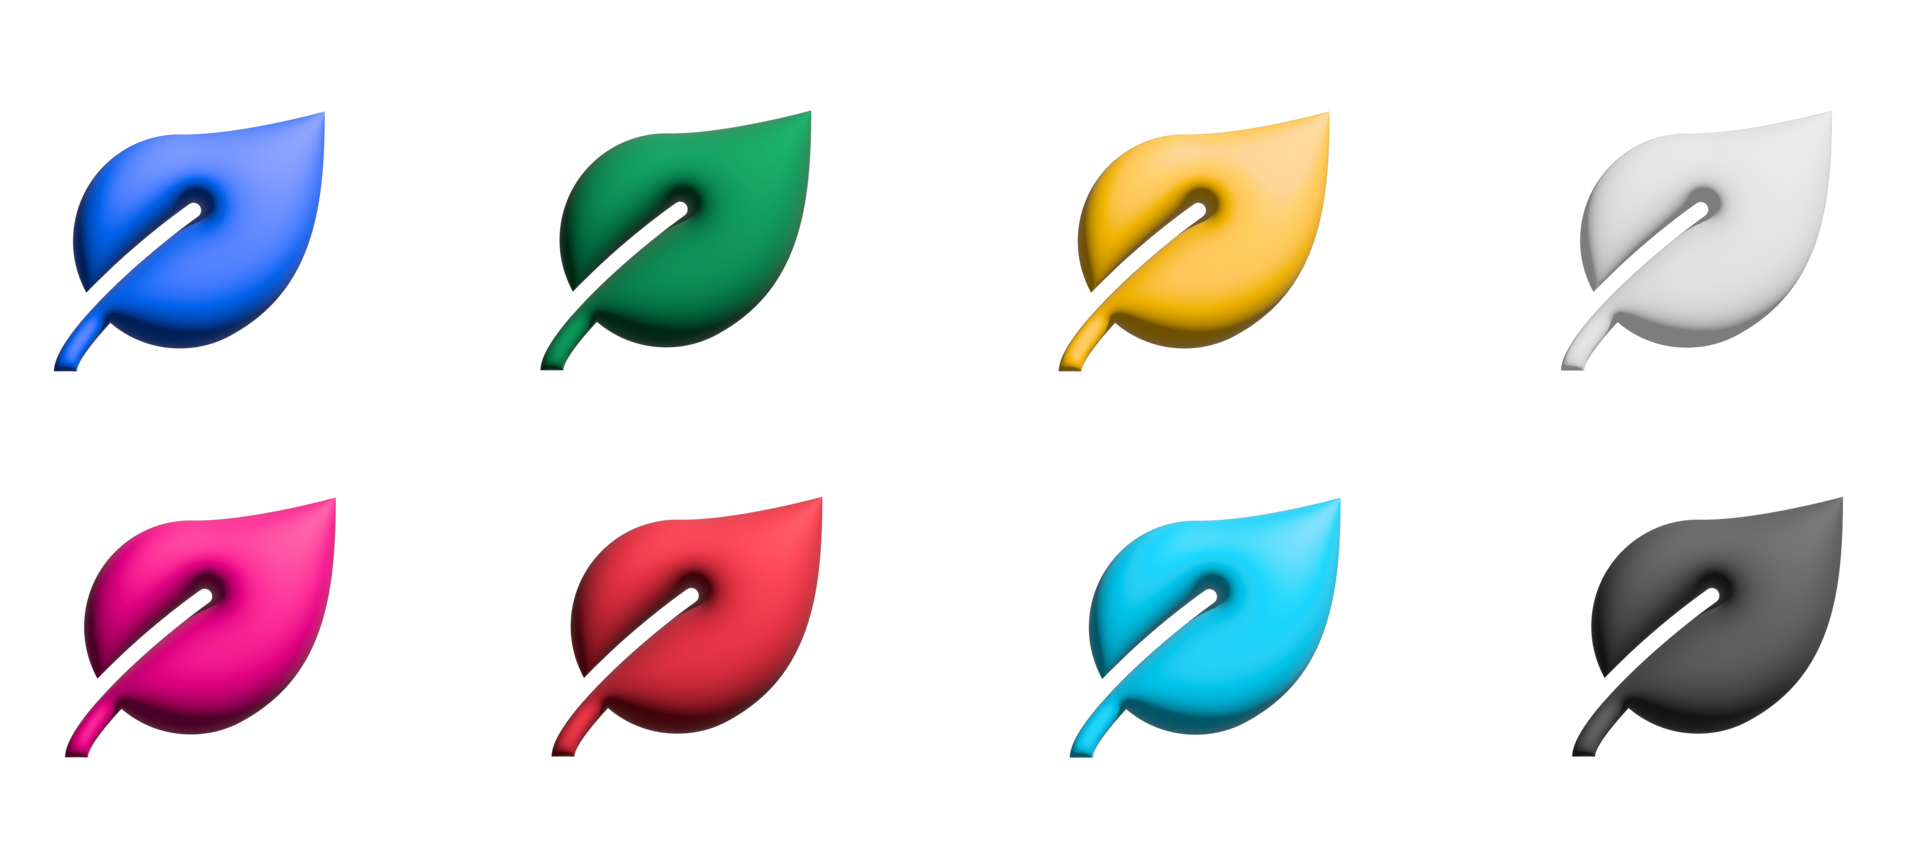 Leaves 3d icon set, colorful symbols graphic elements png